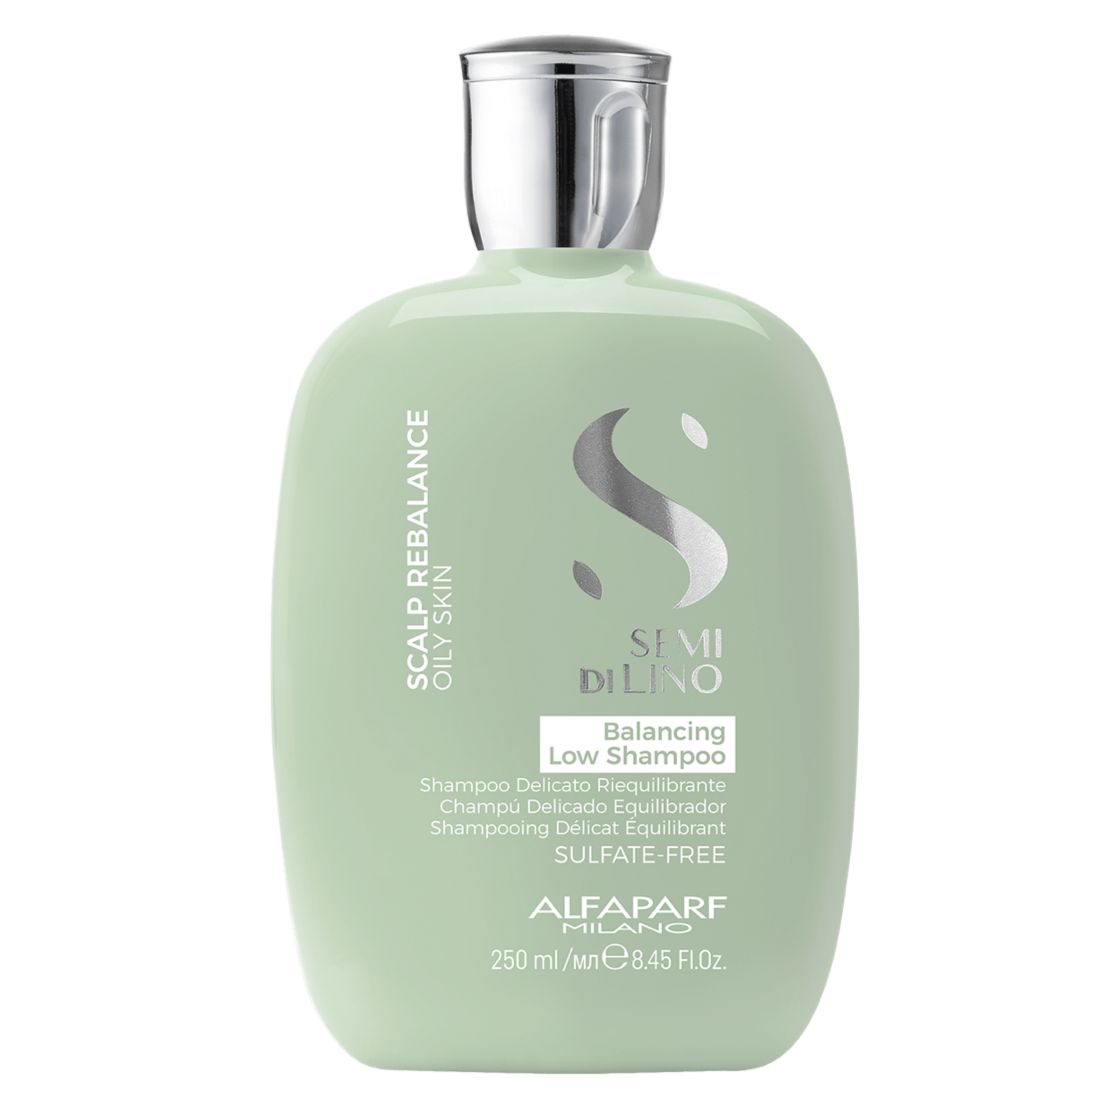 ALFAPARF MILANO Semi Di Lino Scalp Balancing Low Shampoo